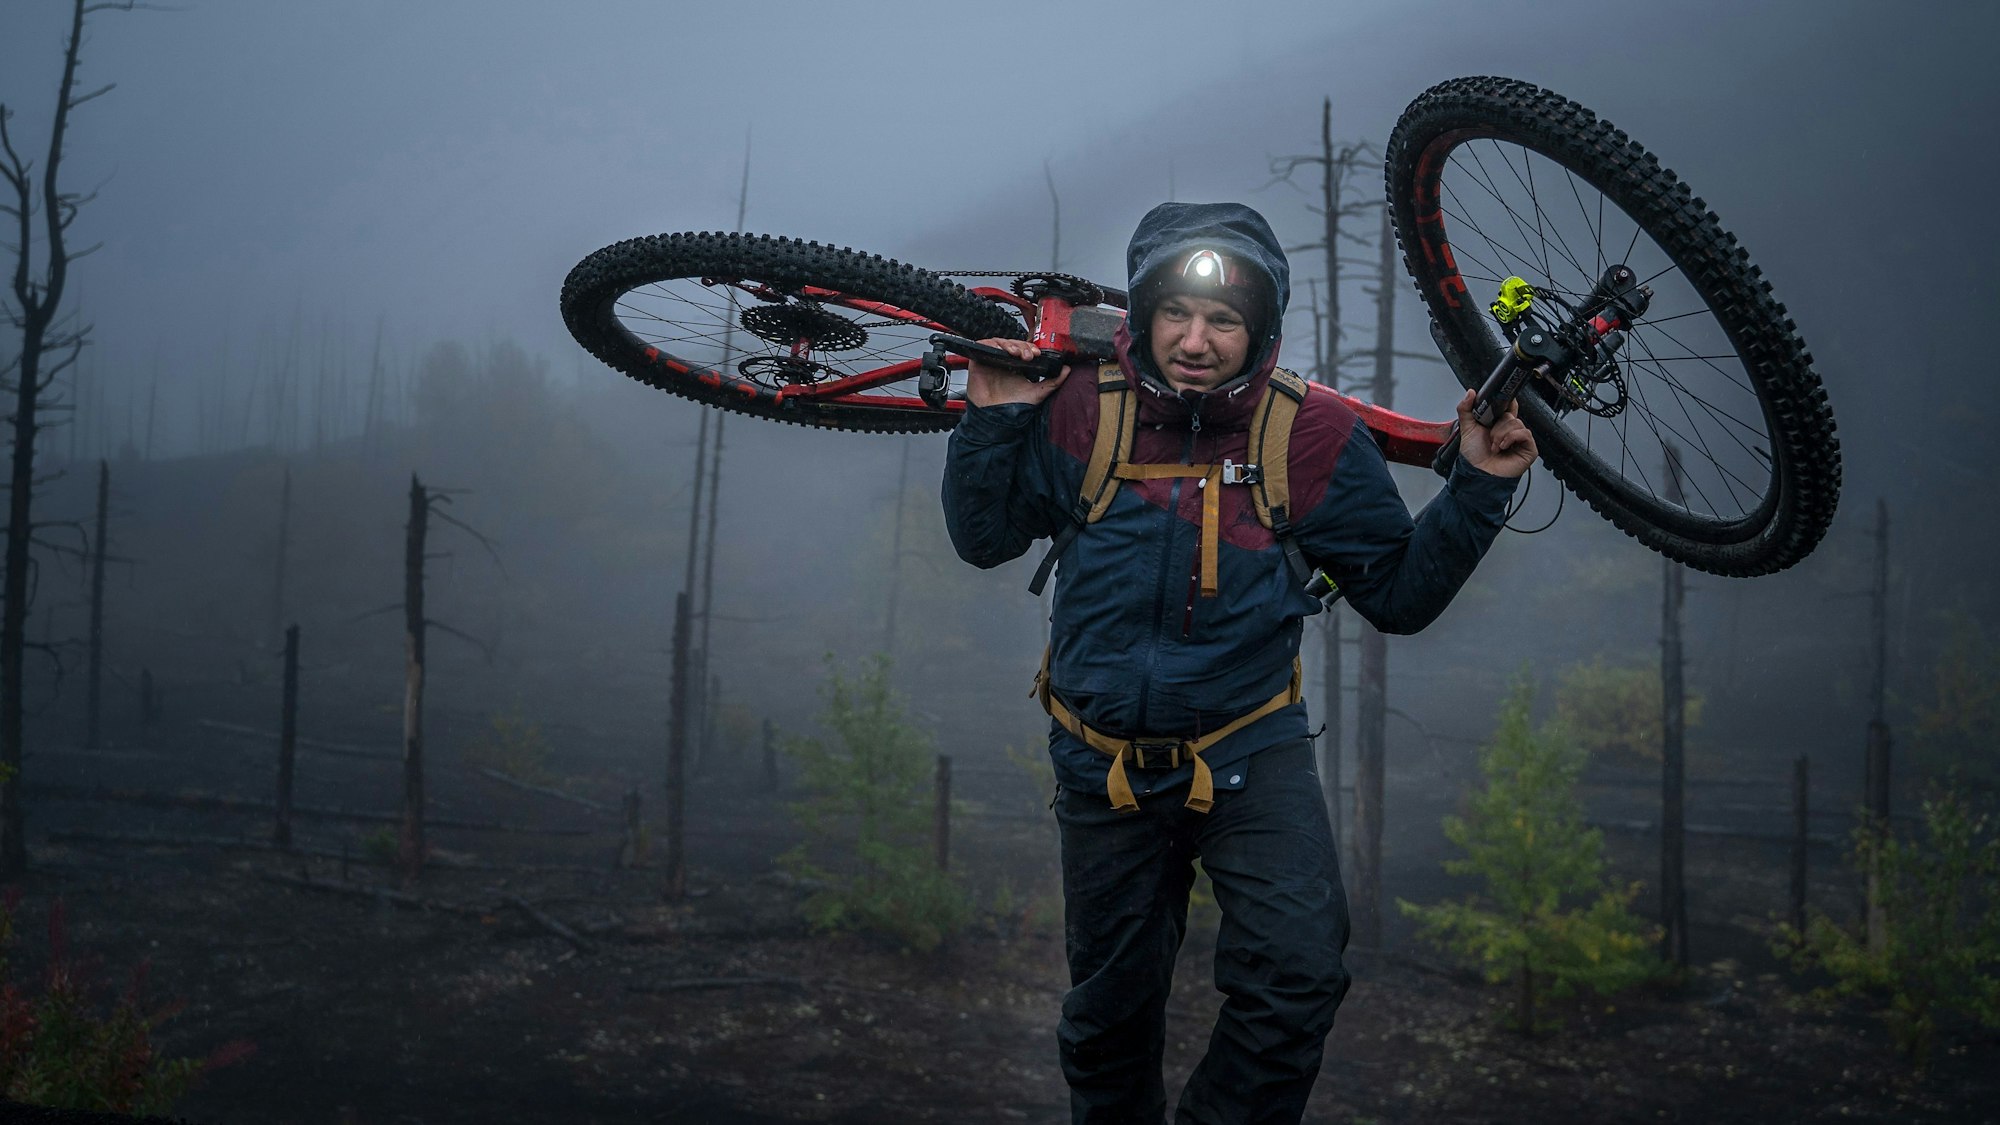 Tobias Woggon mit seinem Mountainbike.